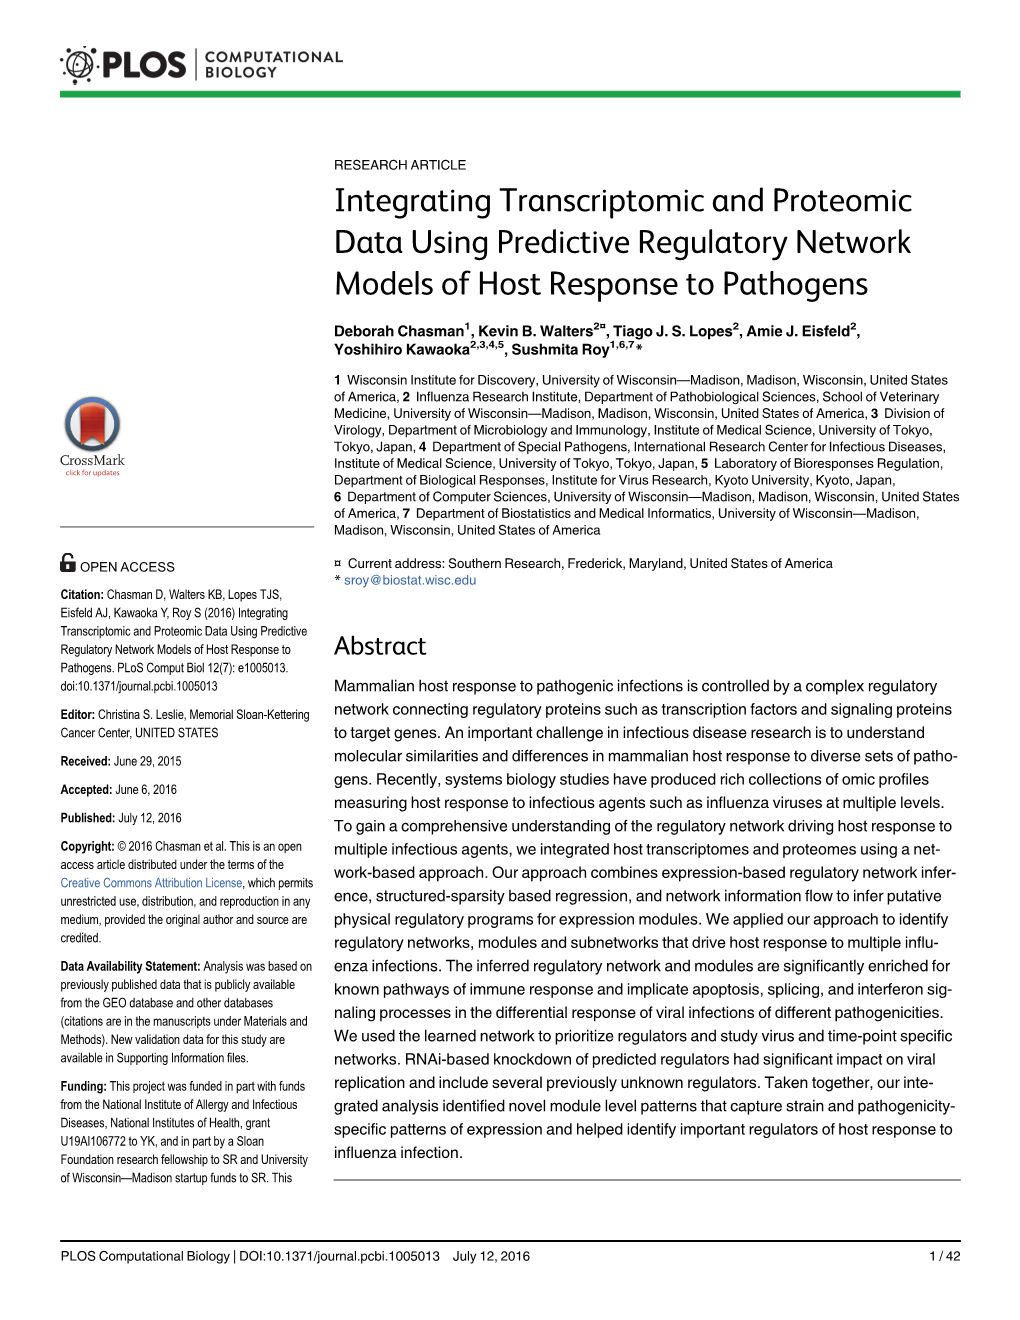 Integrating Transcriptomic and Proteomic Data Using Predictive Regulatory Network Models of Host Response to Pathogens